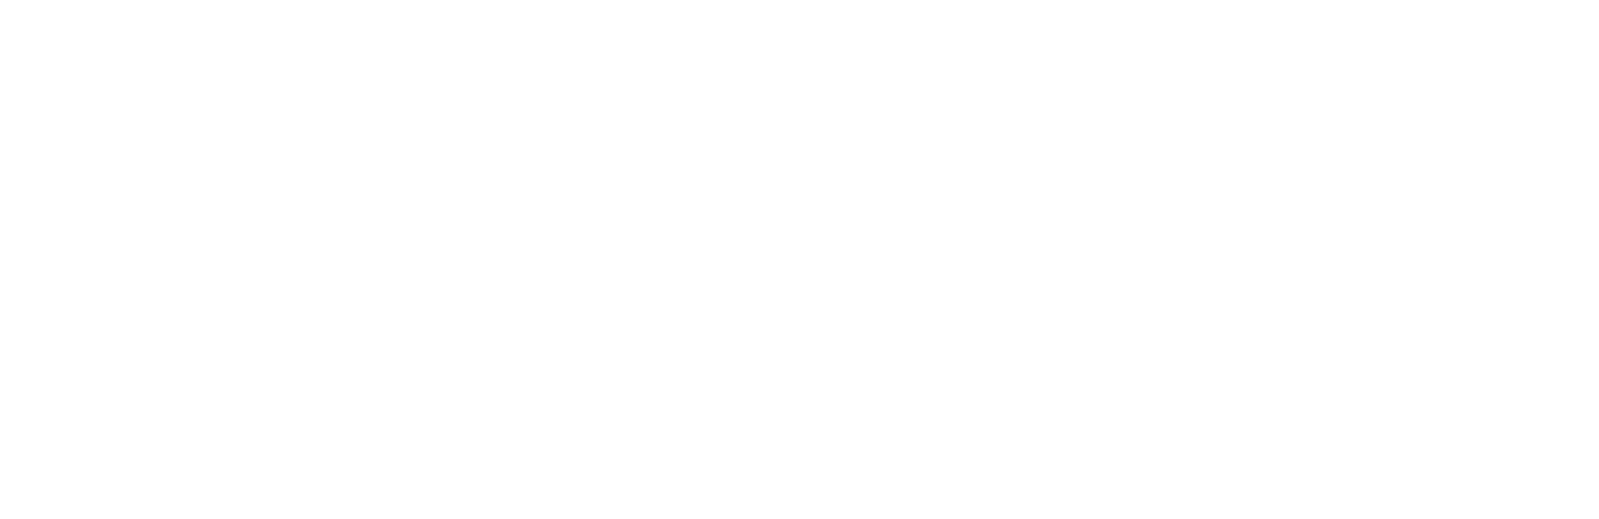 Visa logo - Social media & Logos Icons